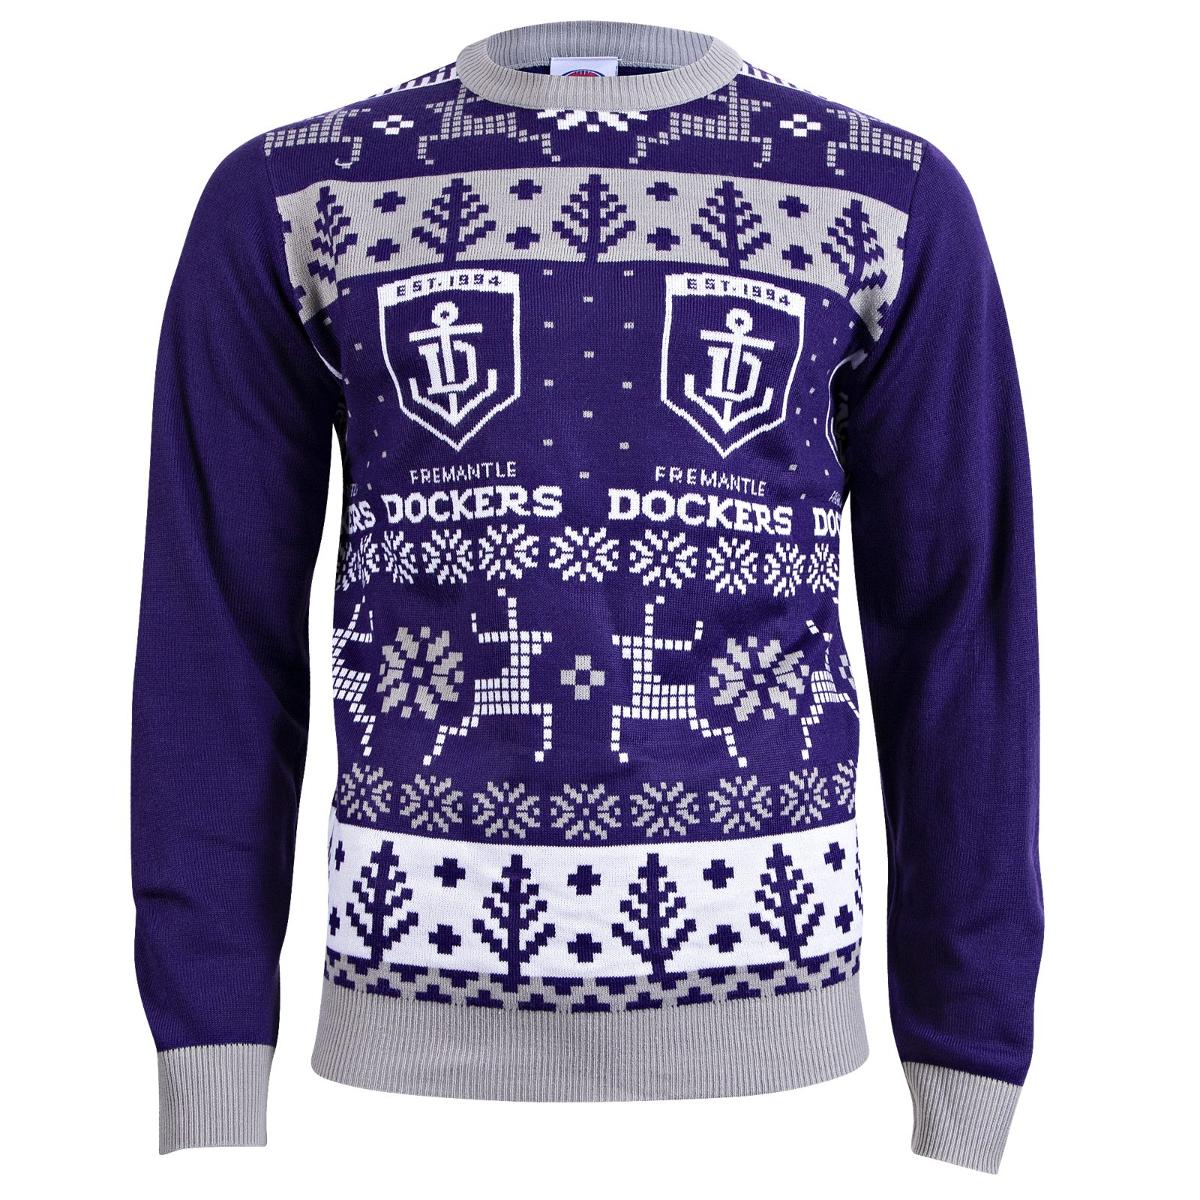 AFL Fremantle Dockers Ugly Christmas Sweater